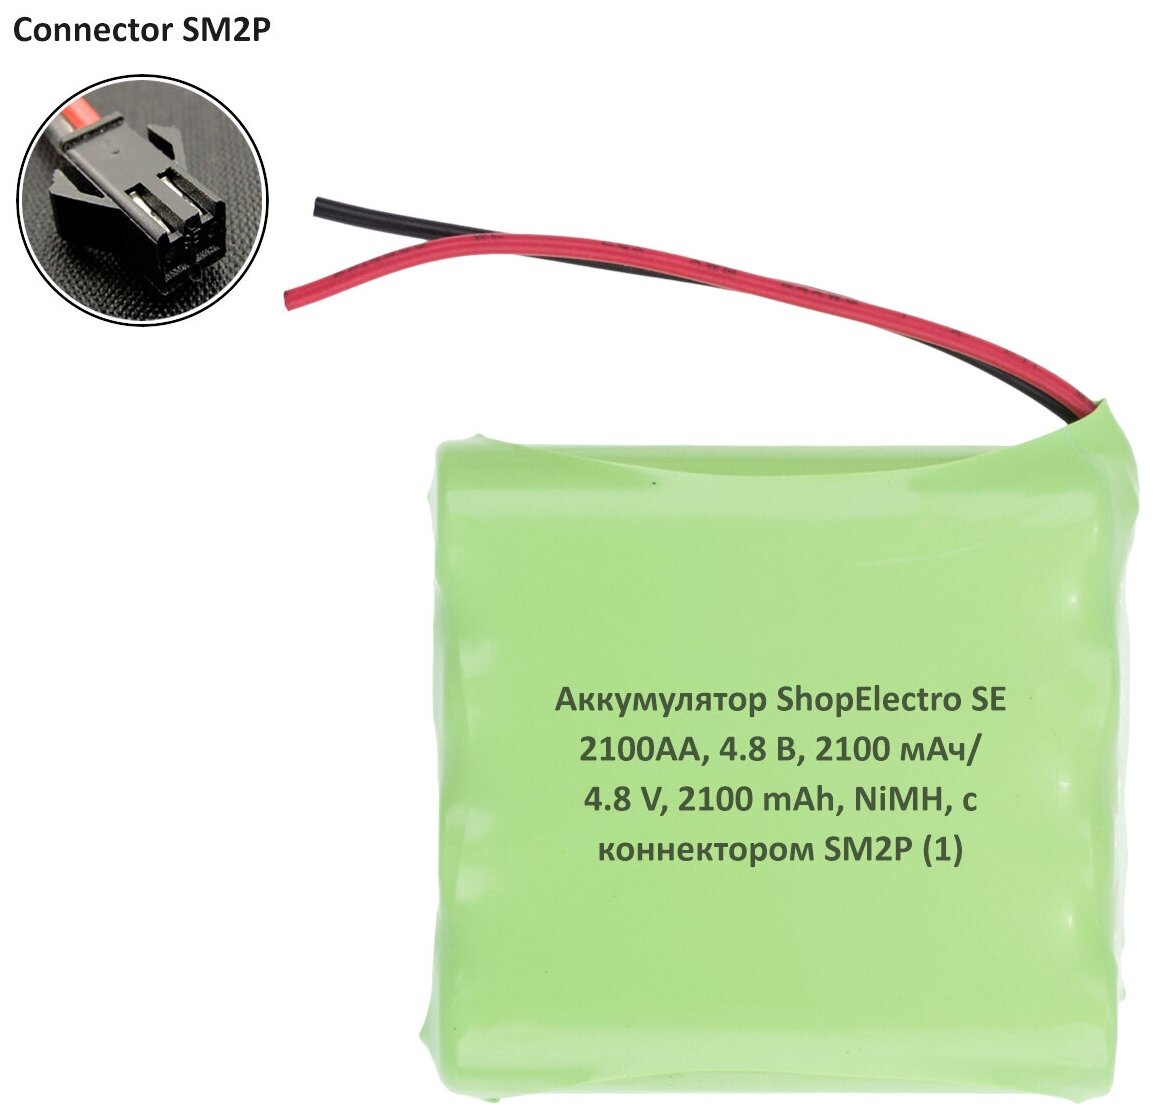 Аккумулятор ShopElectro SE2100АА, 4.8 В, 2100 мАч/ 4.8 V, 2100 mAh, NiMH, с коннектором SM2P (1)